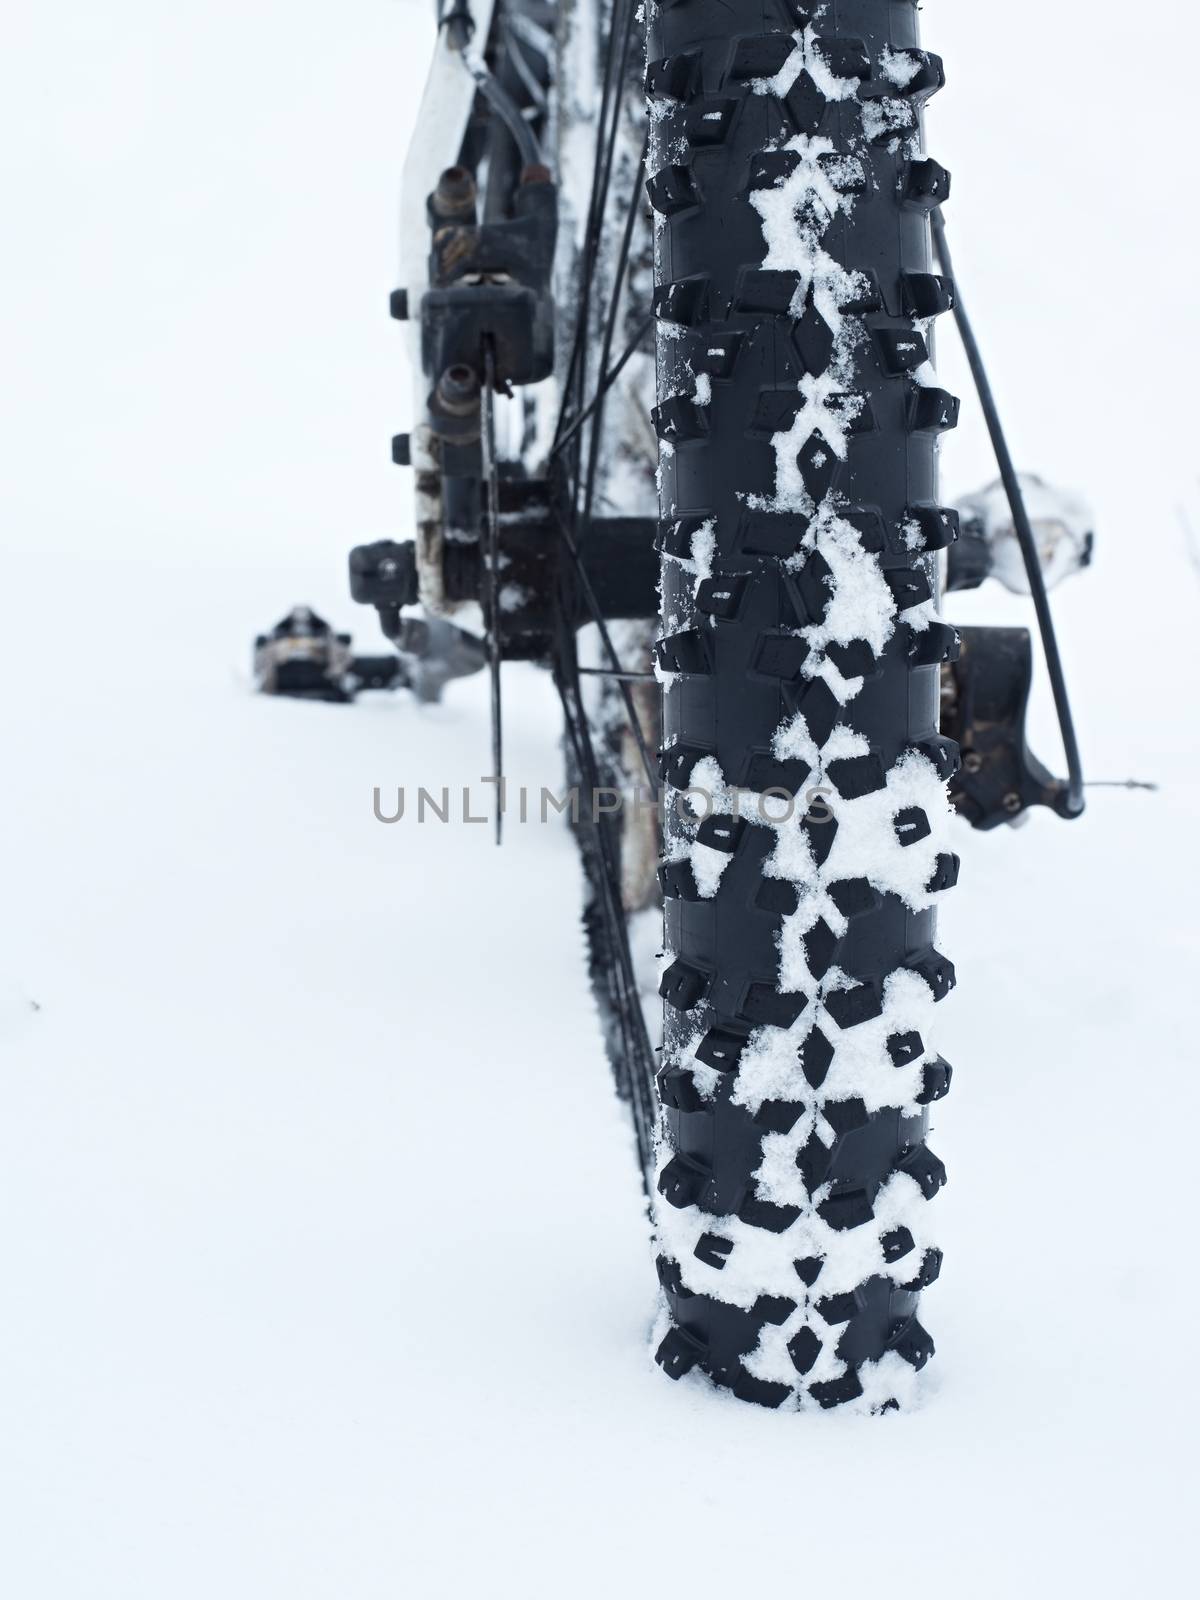 Mountain bike stay in powder snow. Deep snowdrift. Rear wheel detail.  by rdonar2